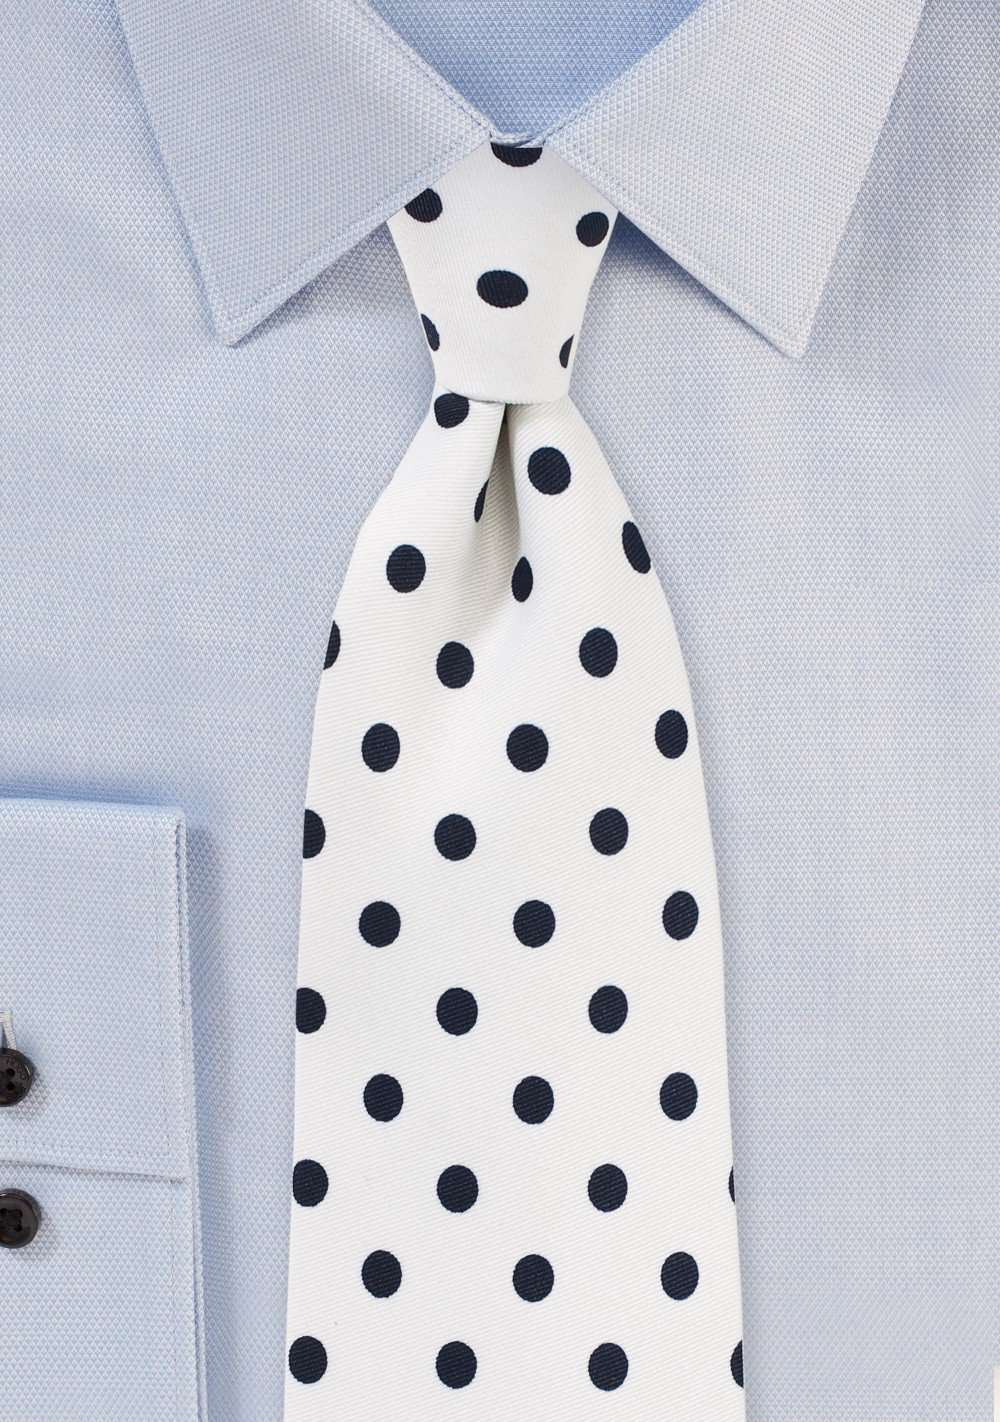 White and Jet Black Polka Dot Necktie - Men Suits